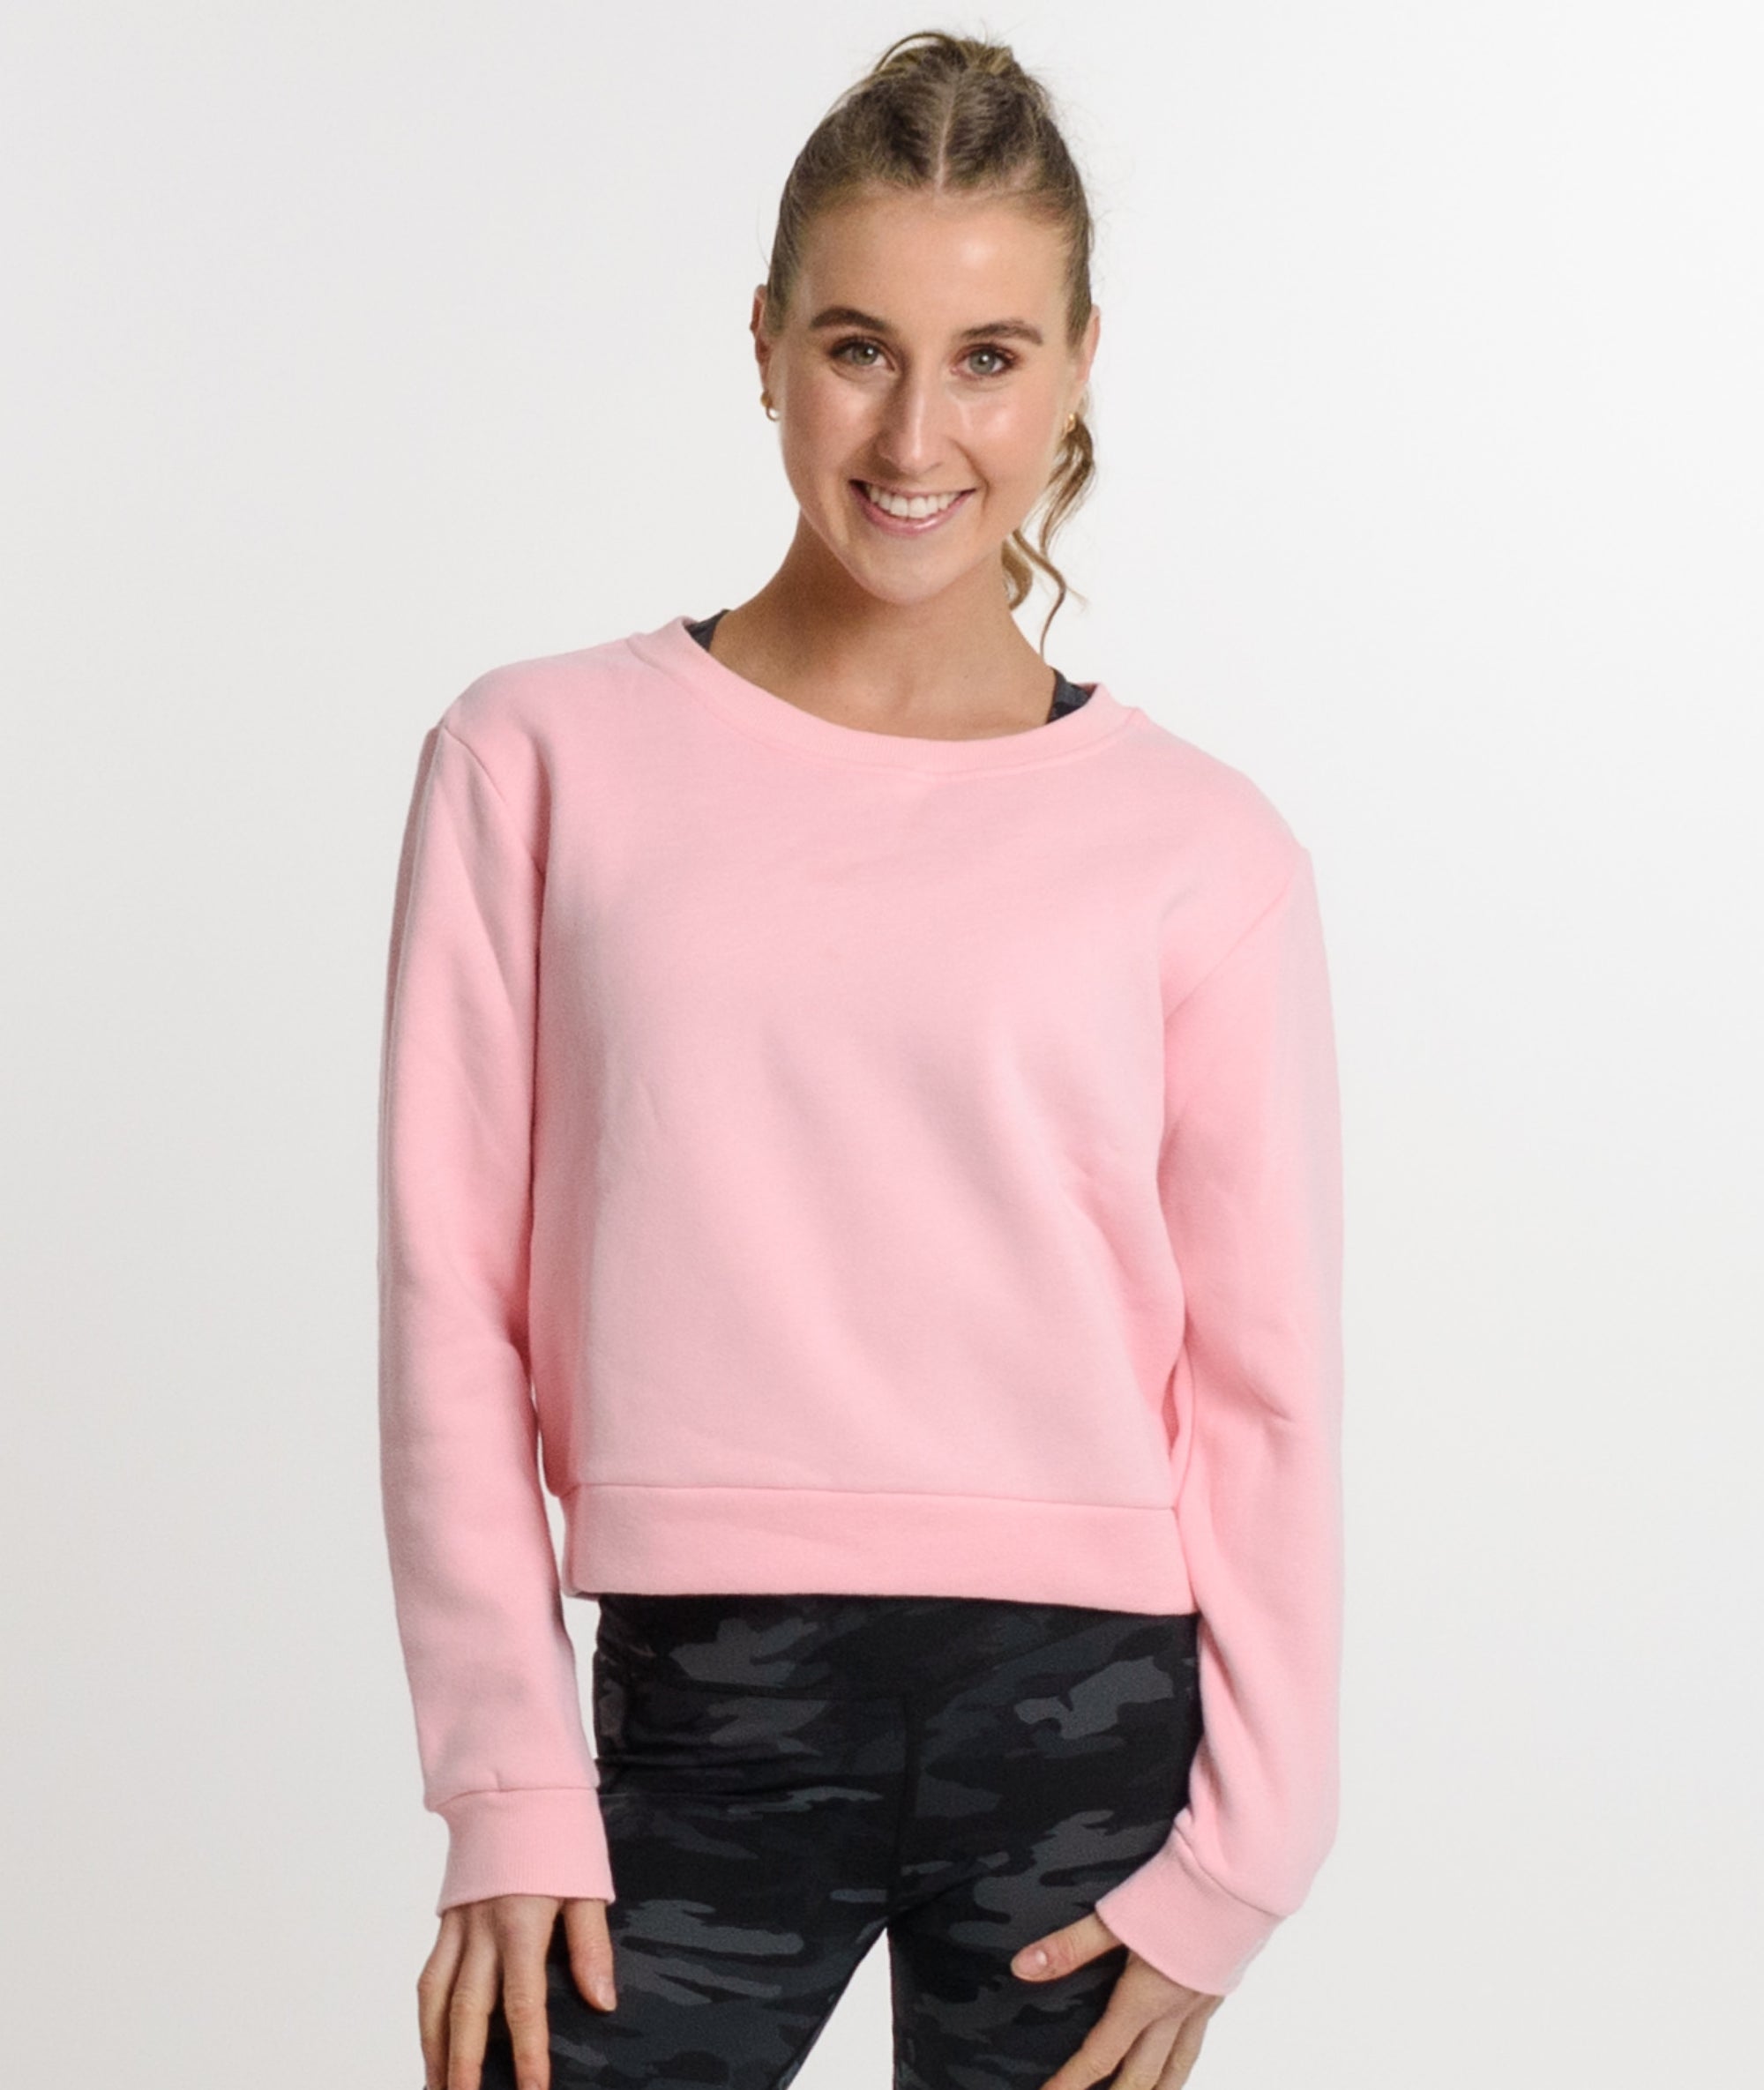 Amy J Perky Sweater - Barbie Pink